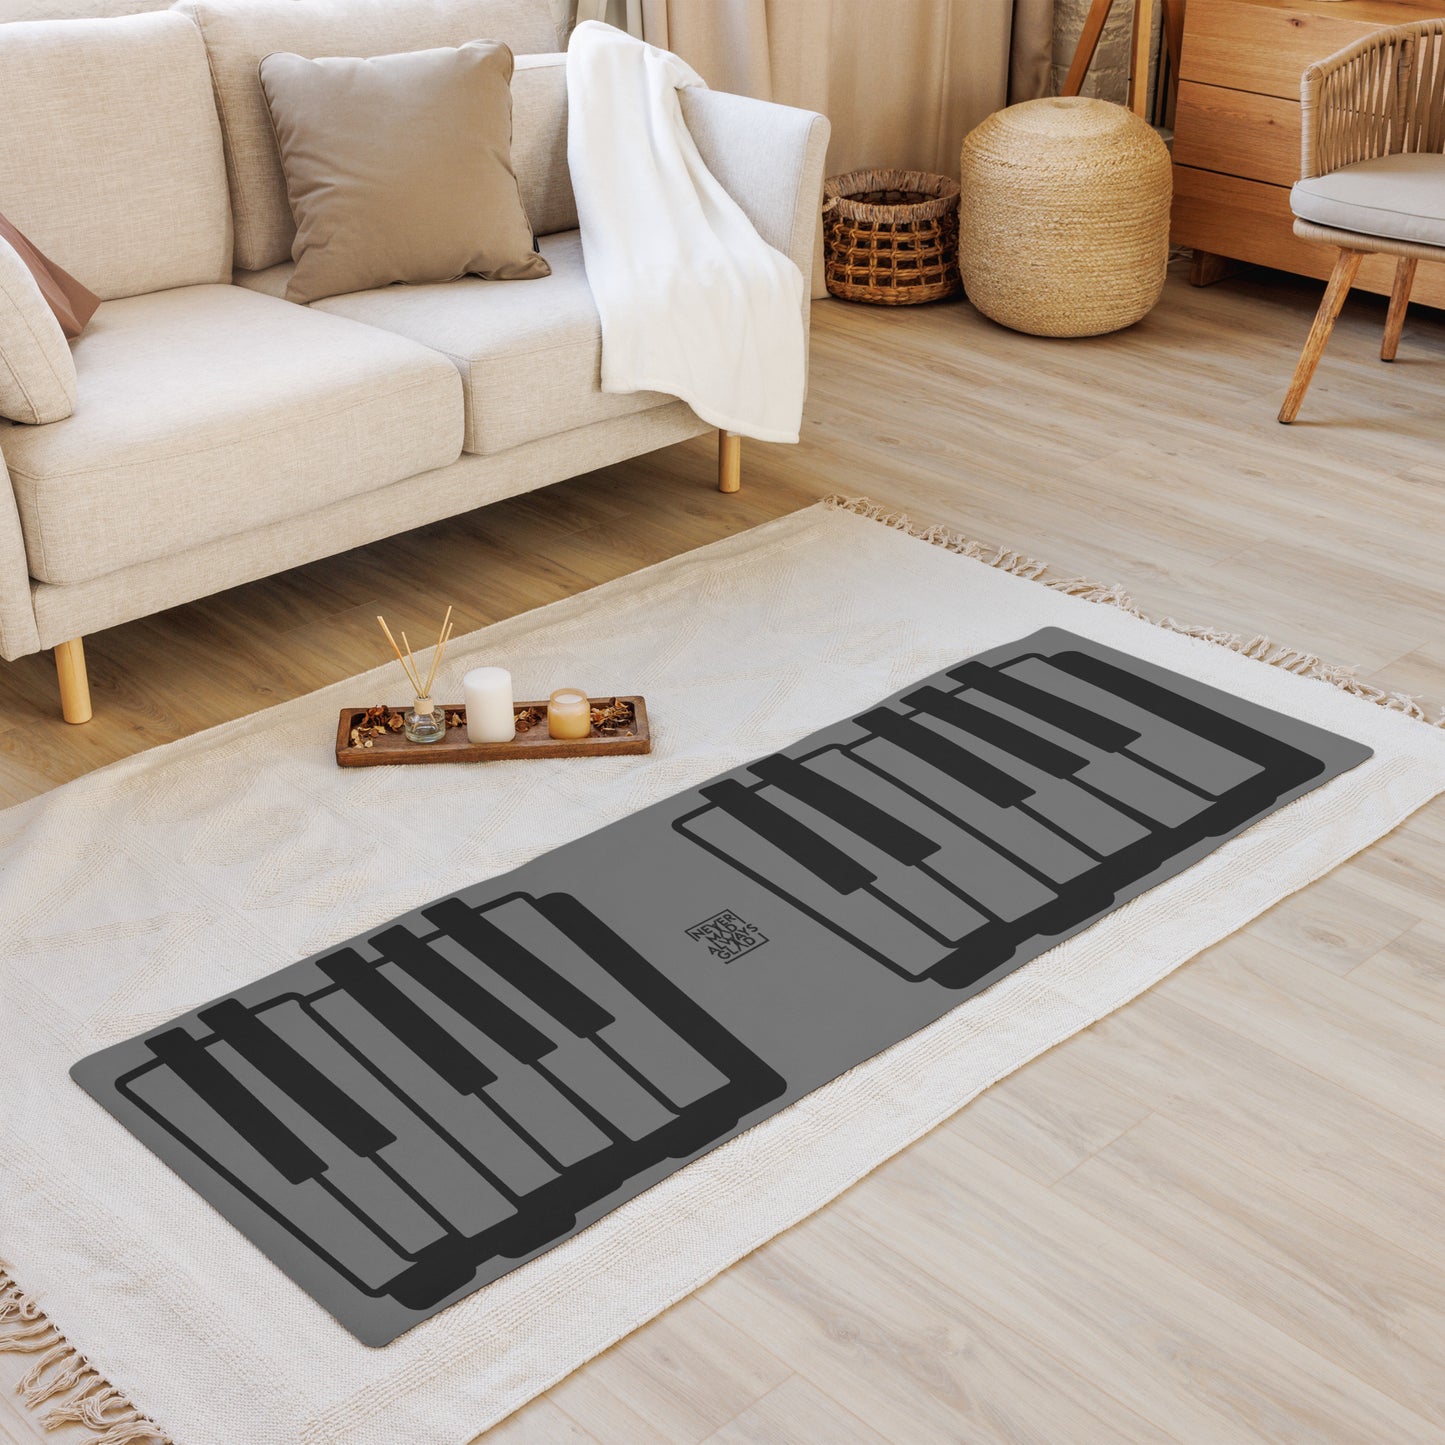 Piano Yoga mat